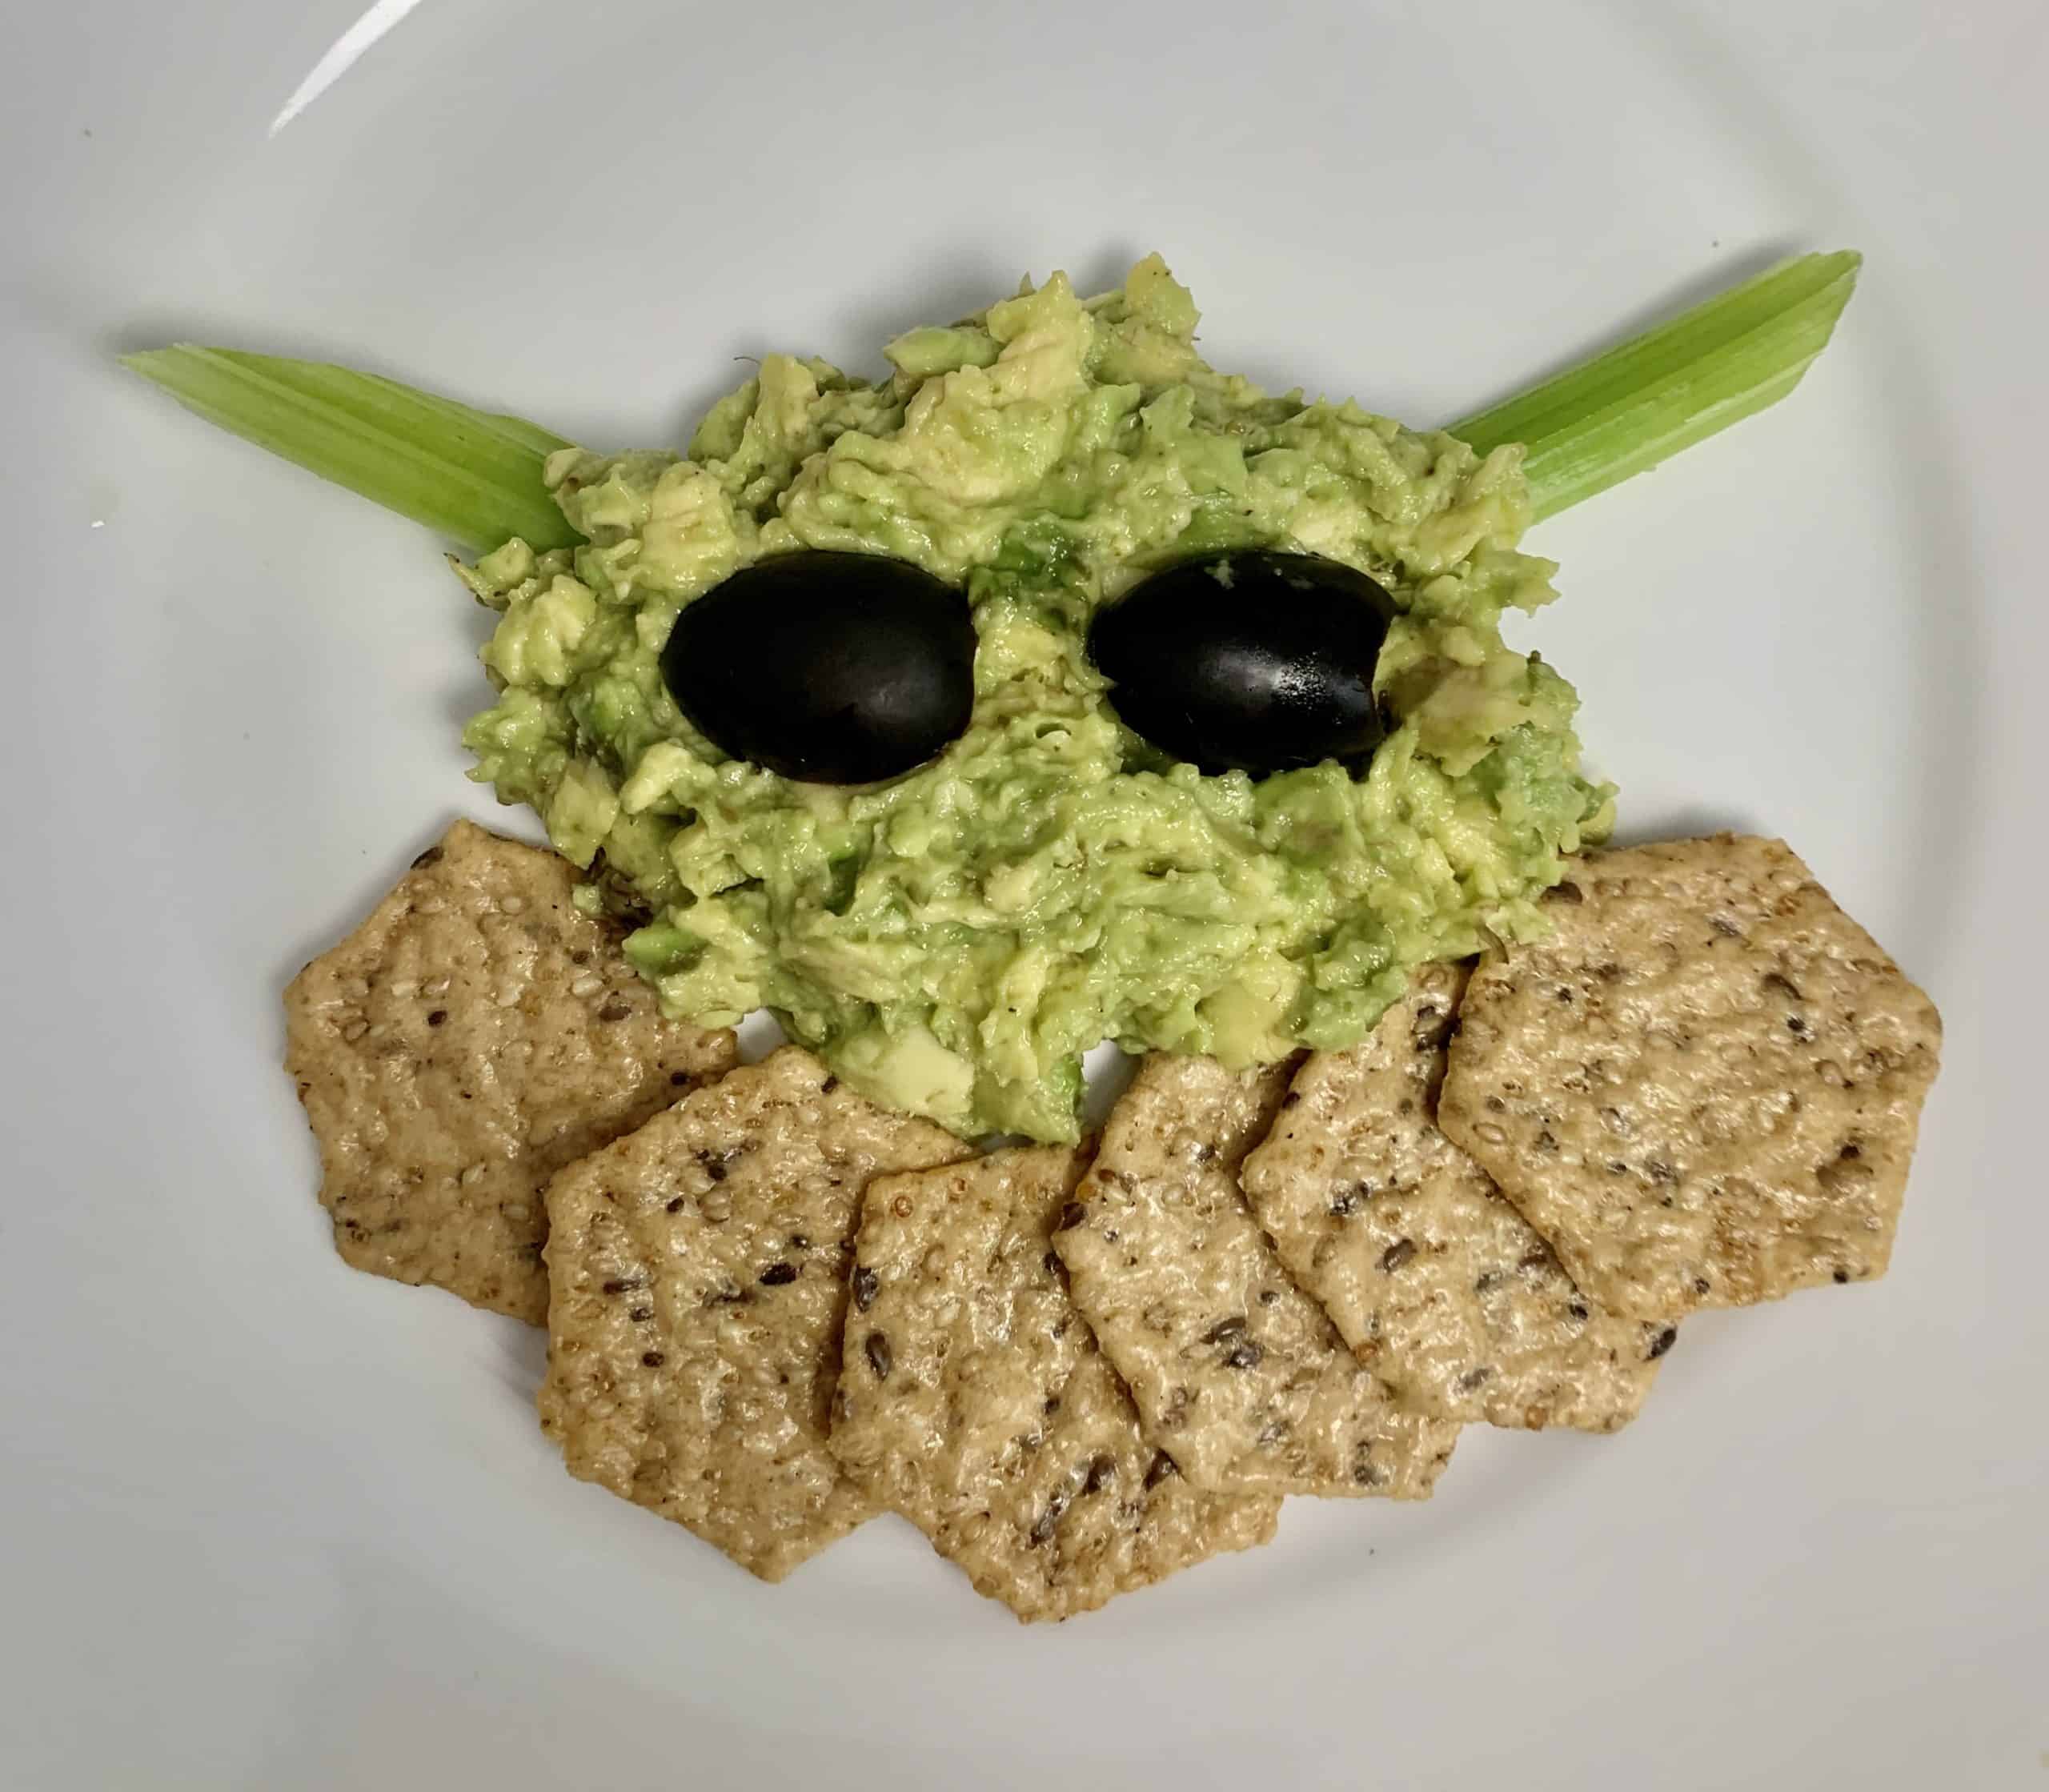 Avocado celery crackers and black olives form Baby Yoda face